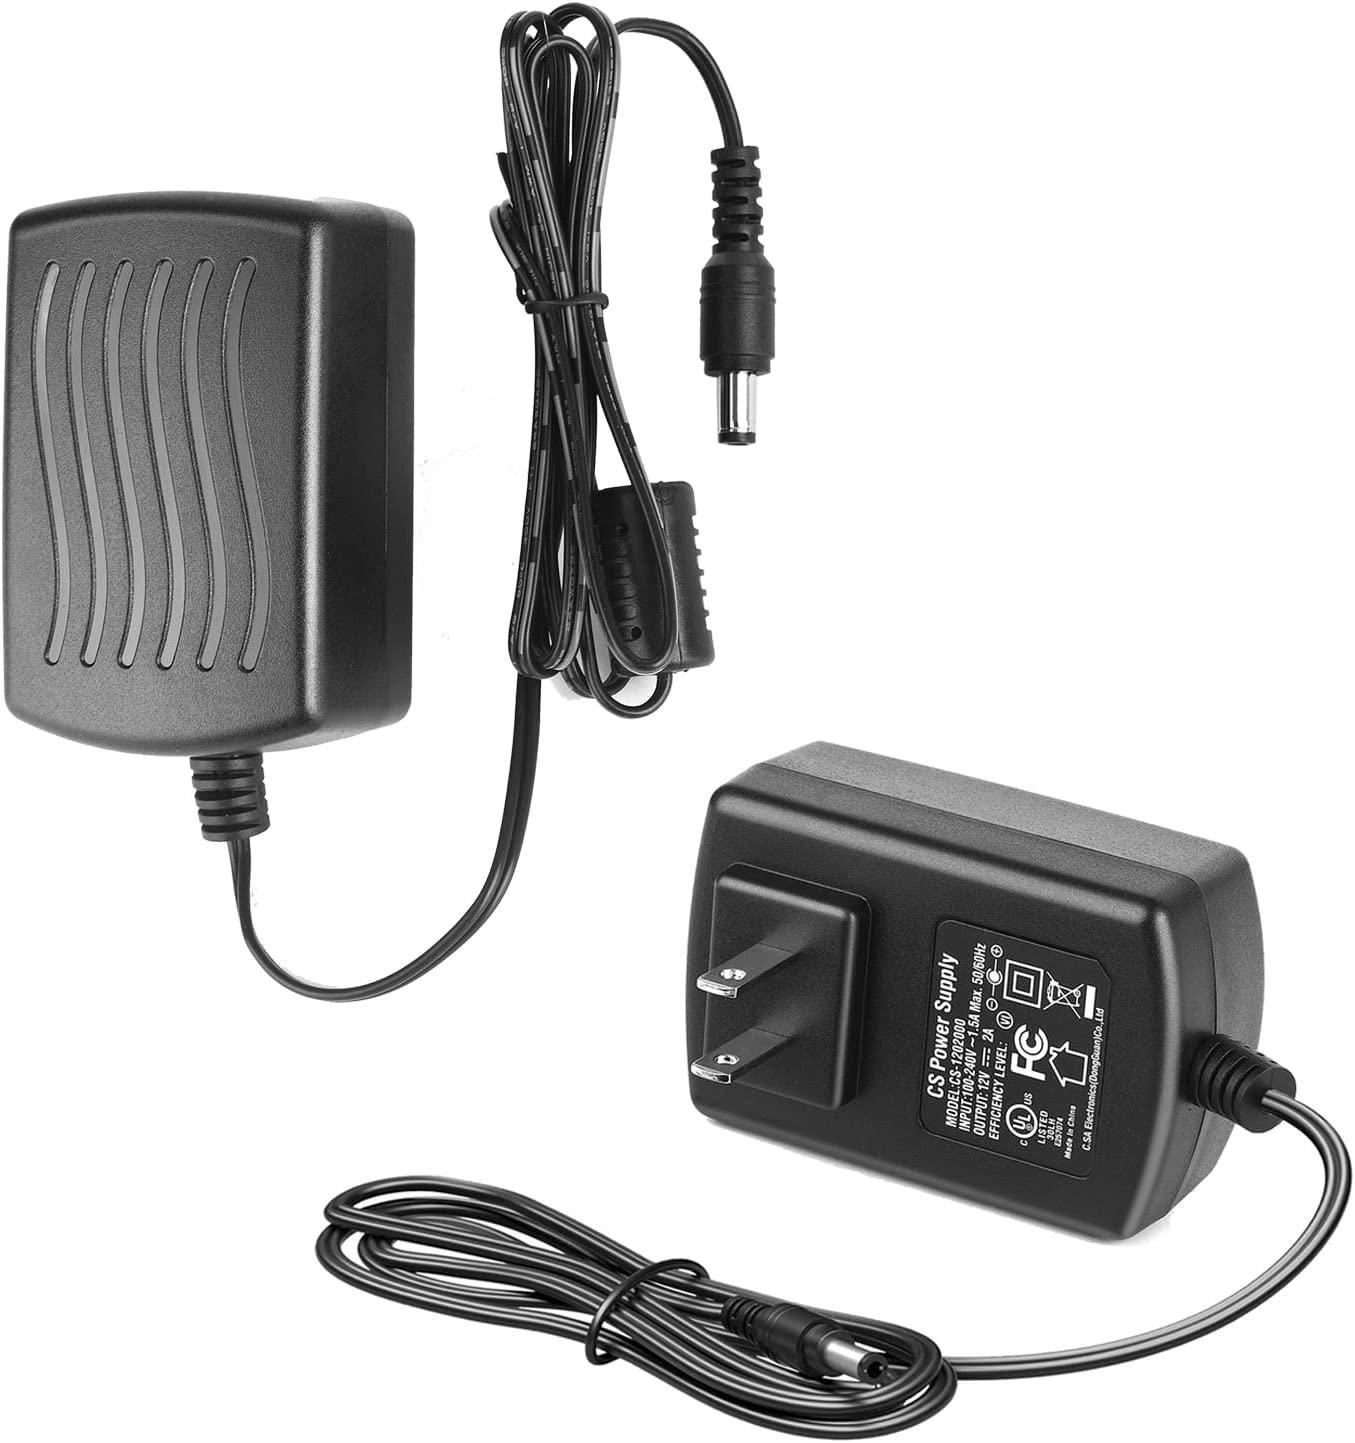 Input 100-240v 50-60hz Ac Adapter